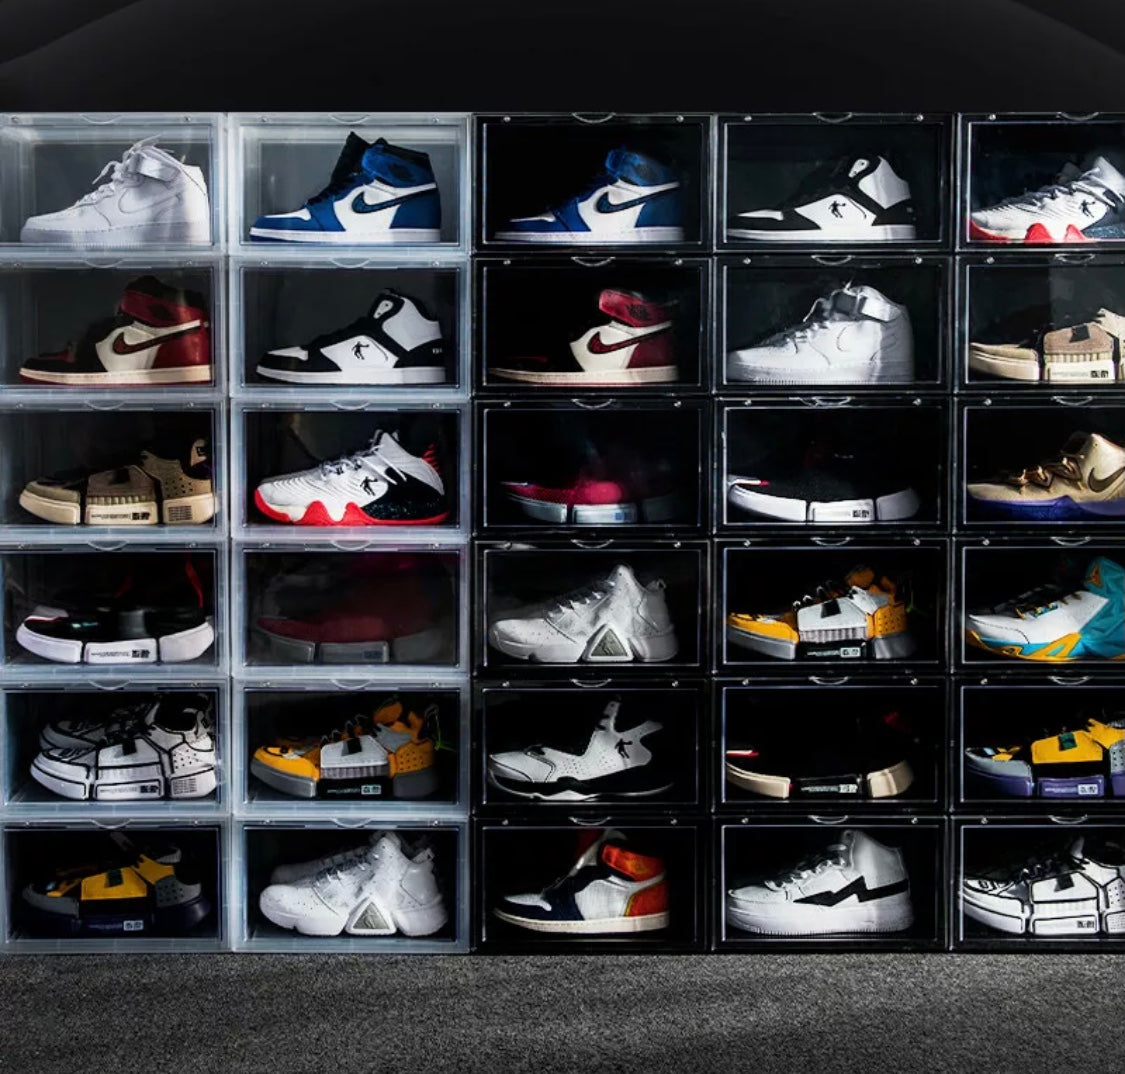 Sneaker Storage Box on X: That LV orange 🍊 be popping